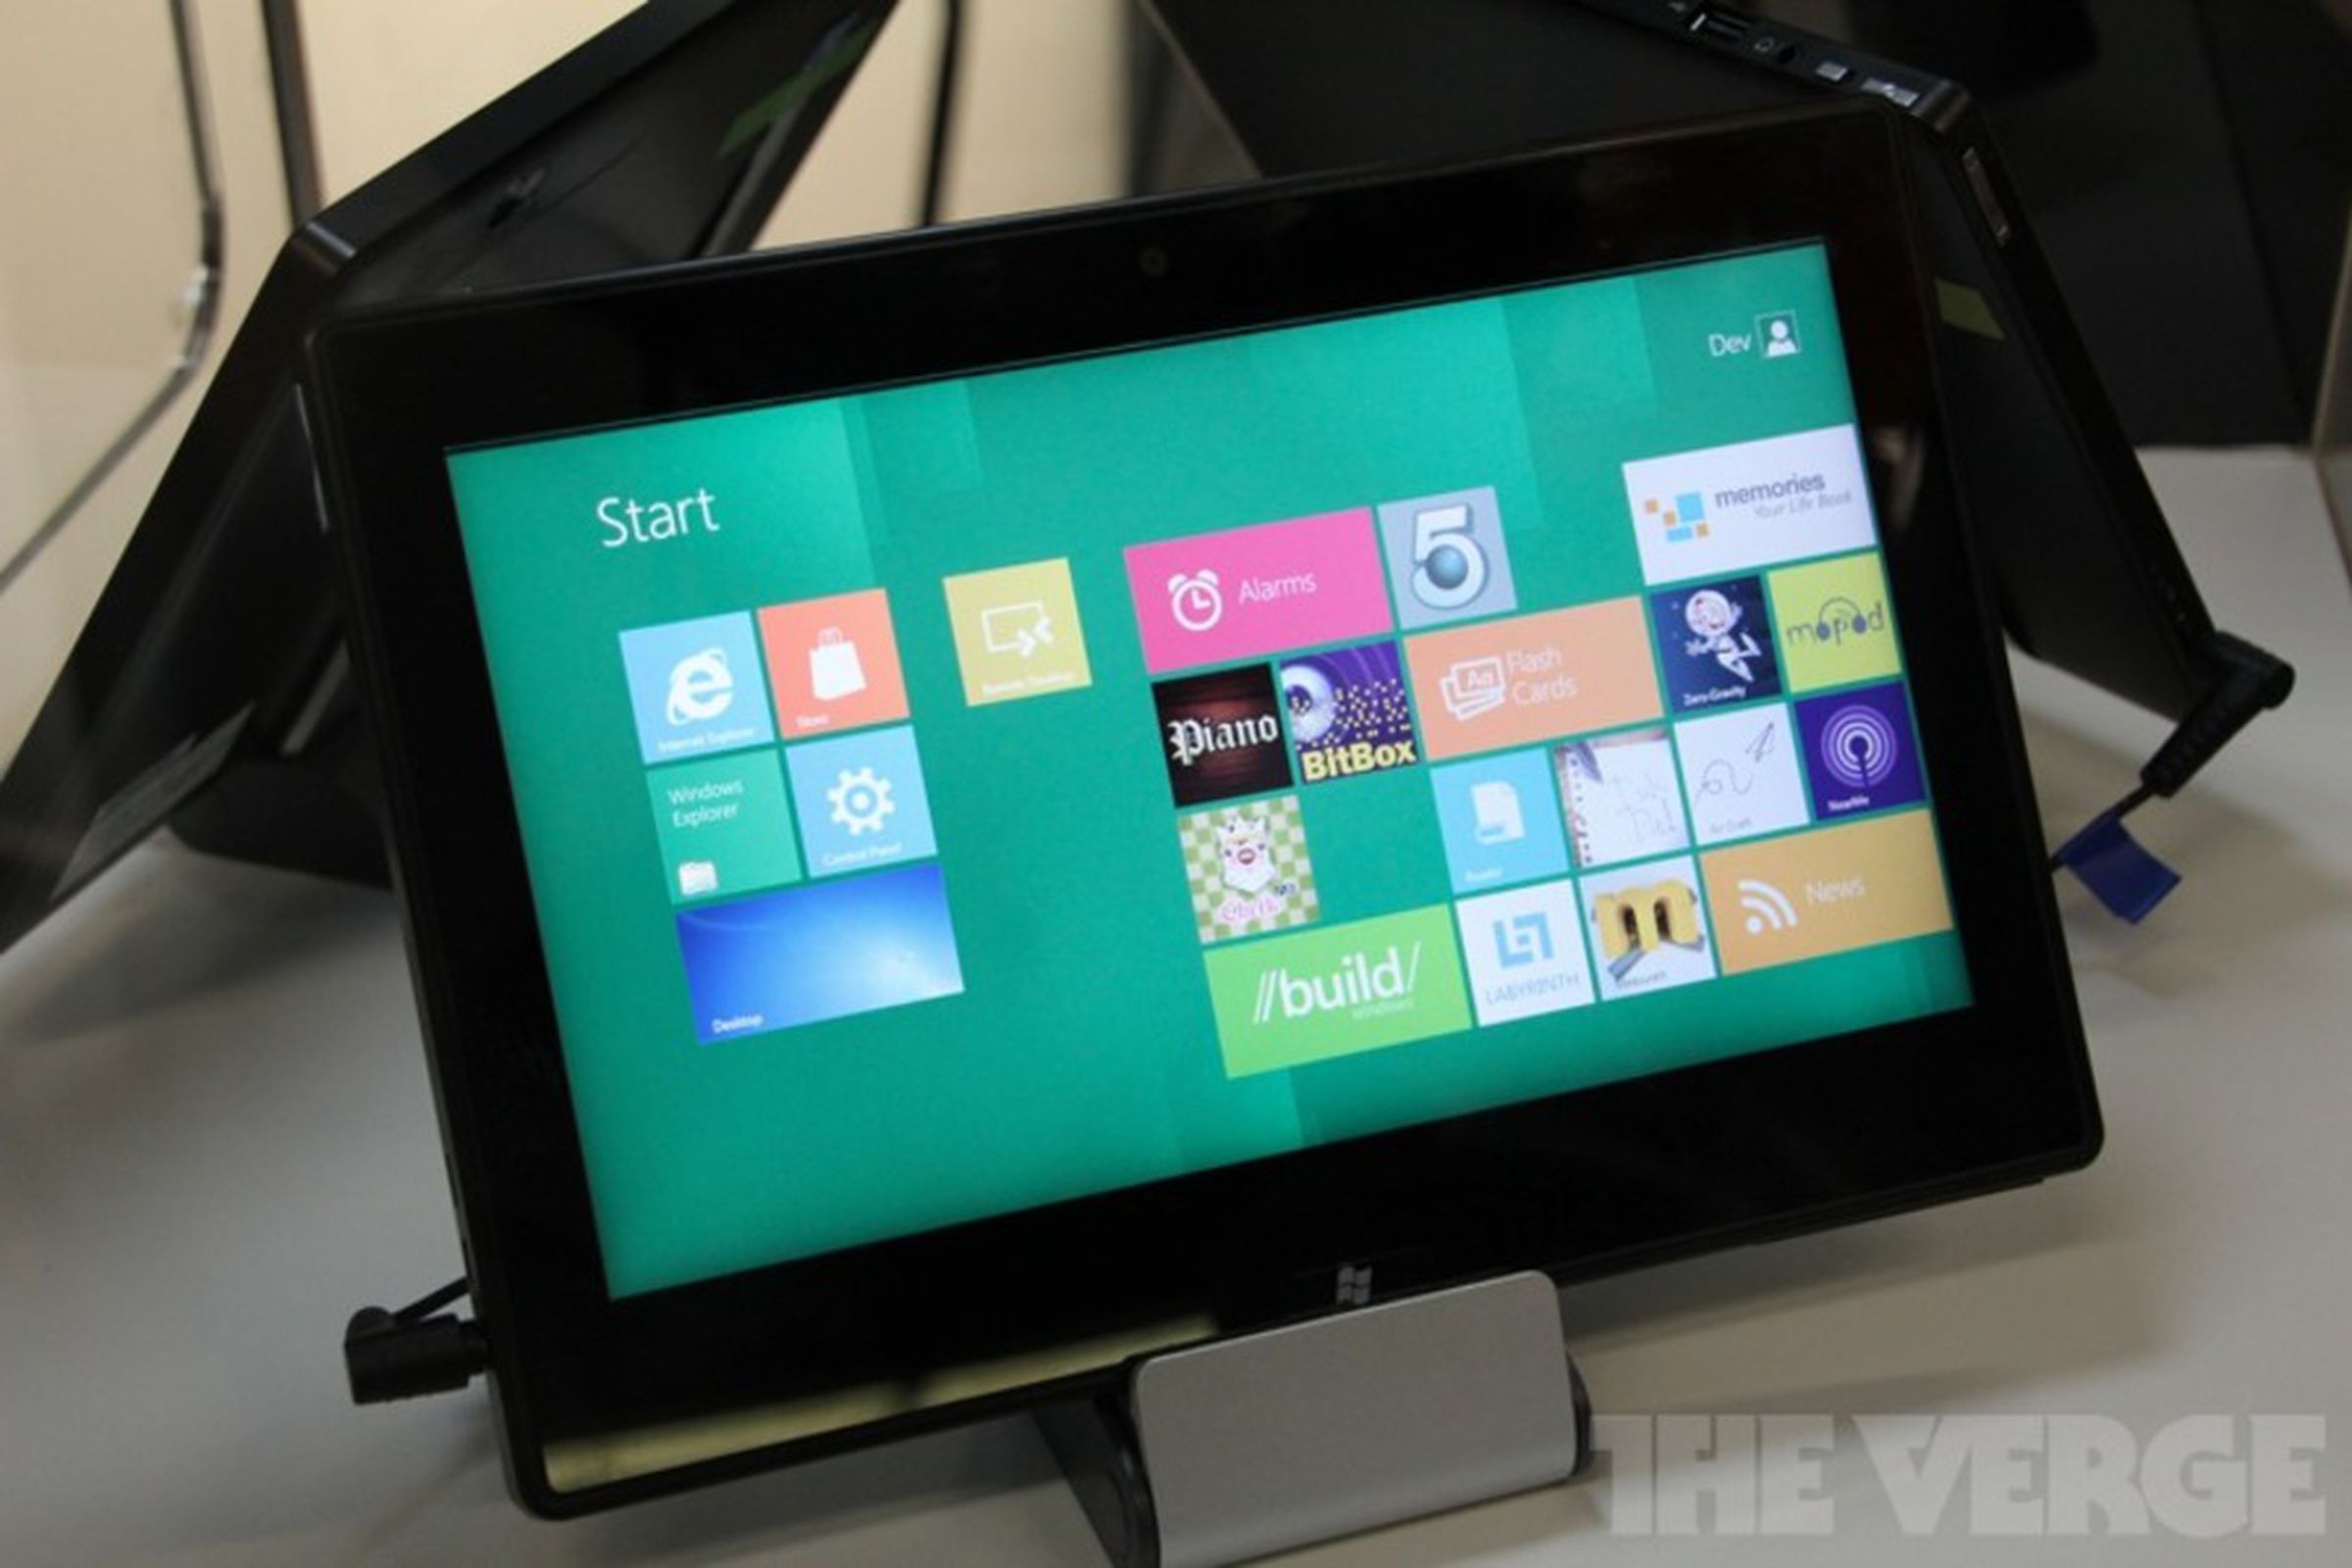 TI Windows 8 tablet ARM